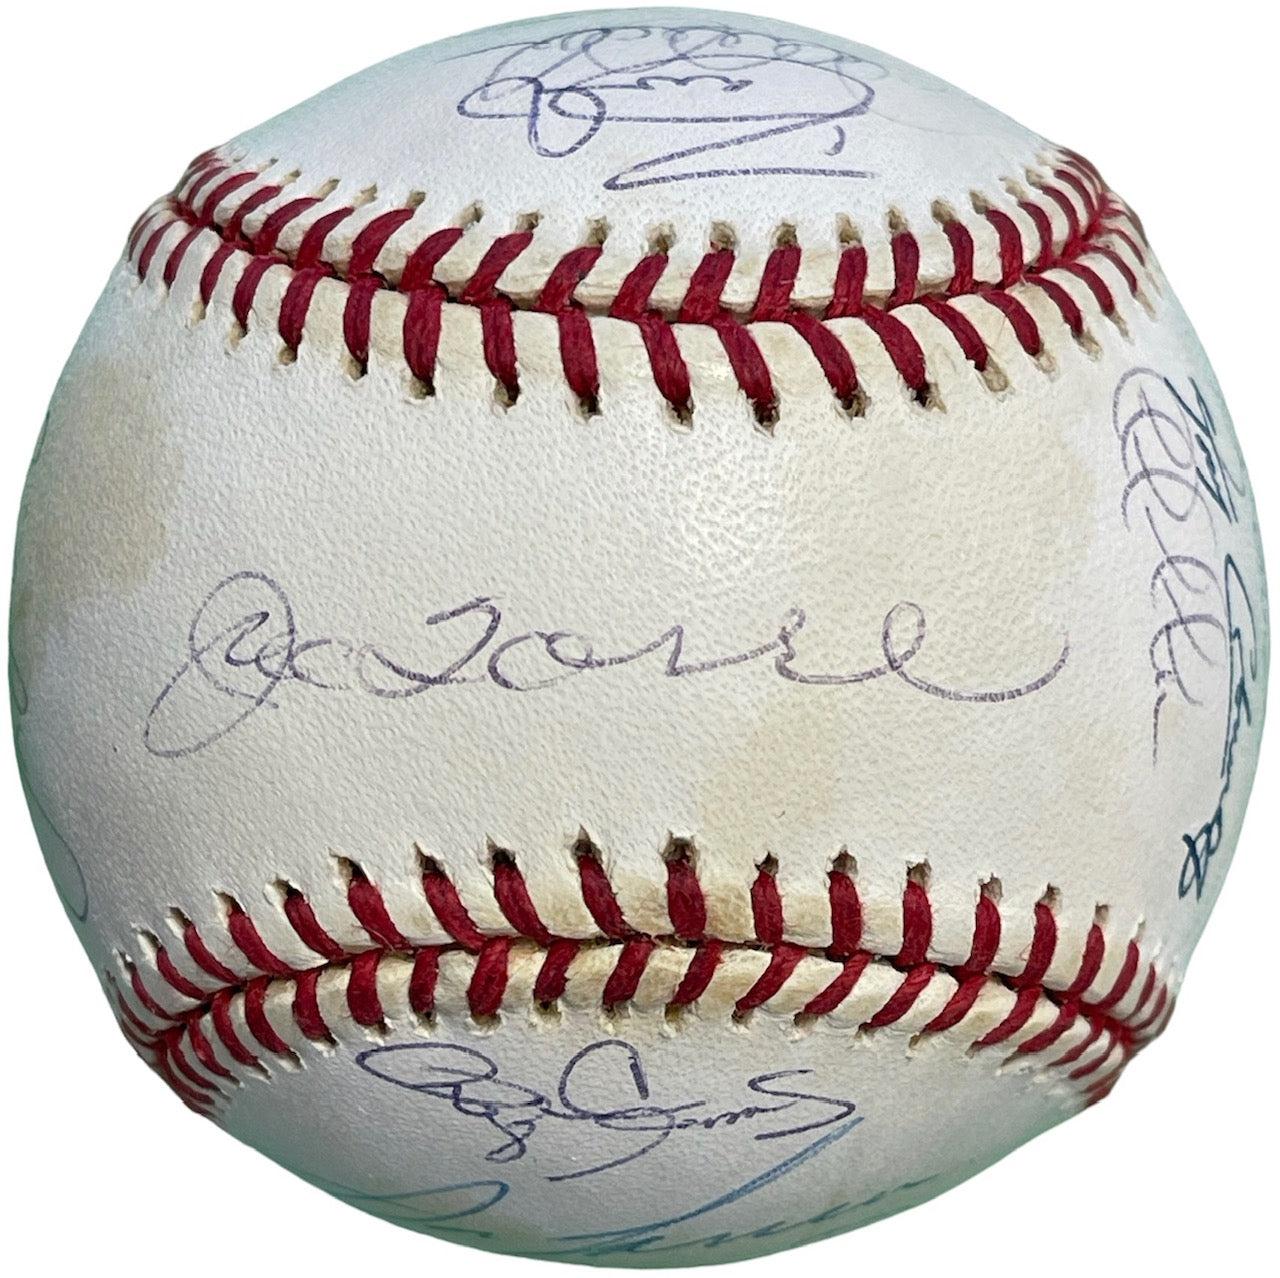 Paul O'Neill Certified Autographed Baseball Card